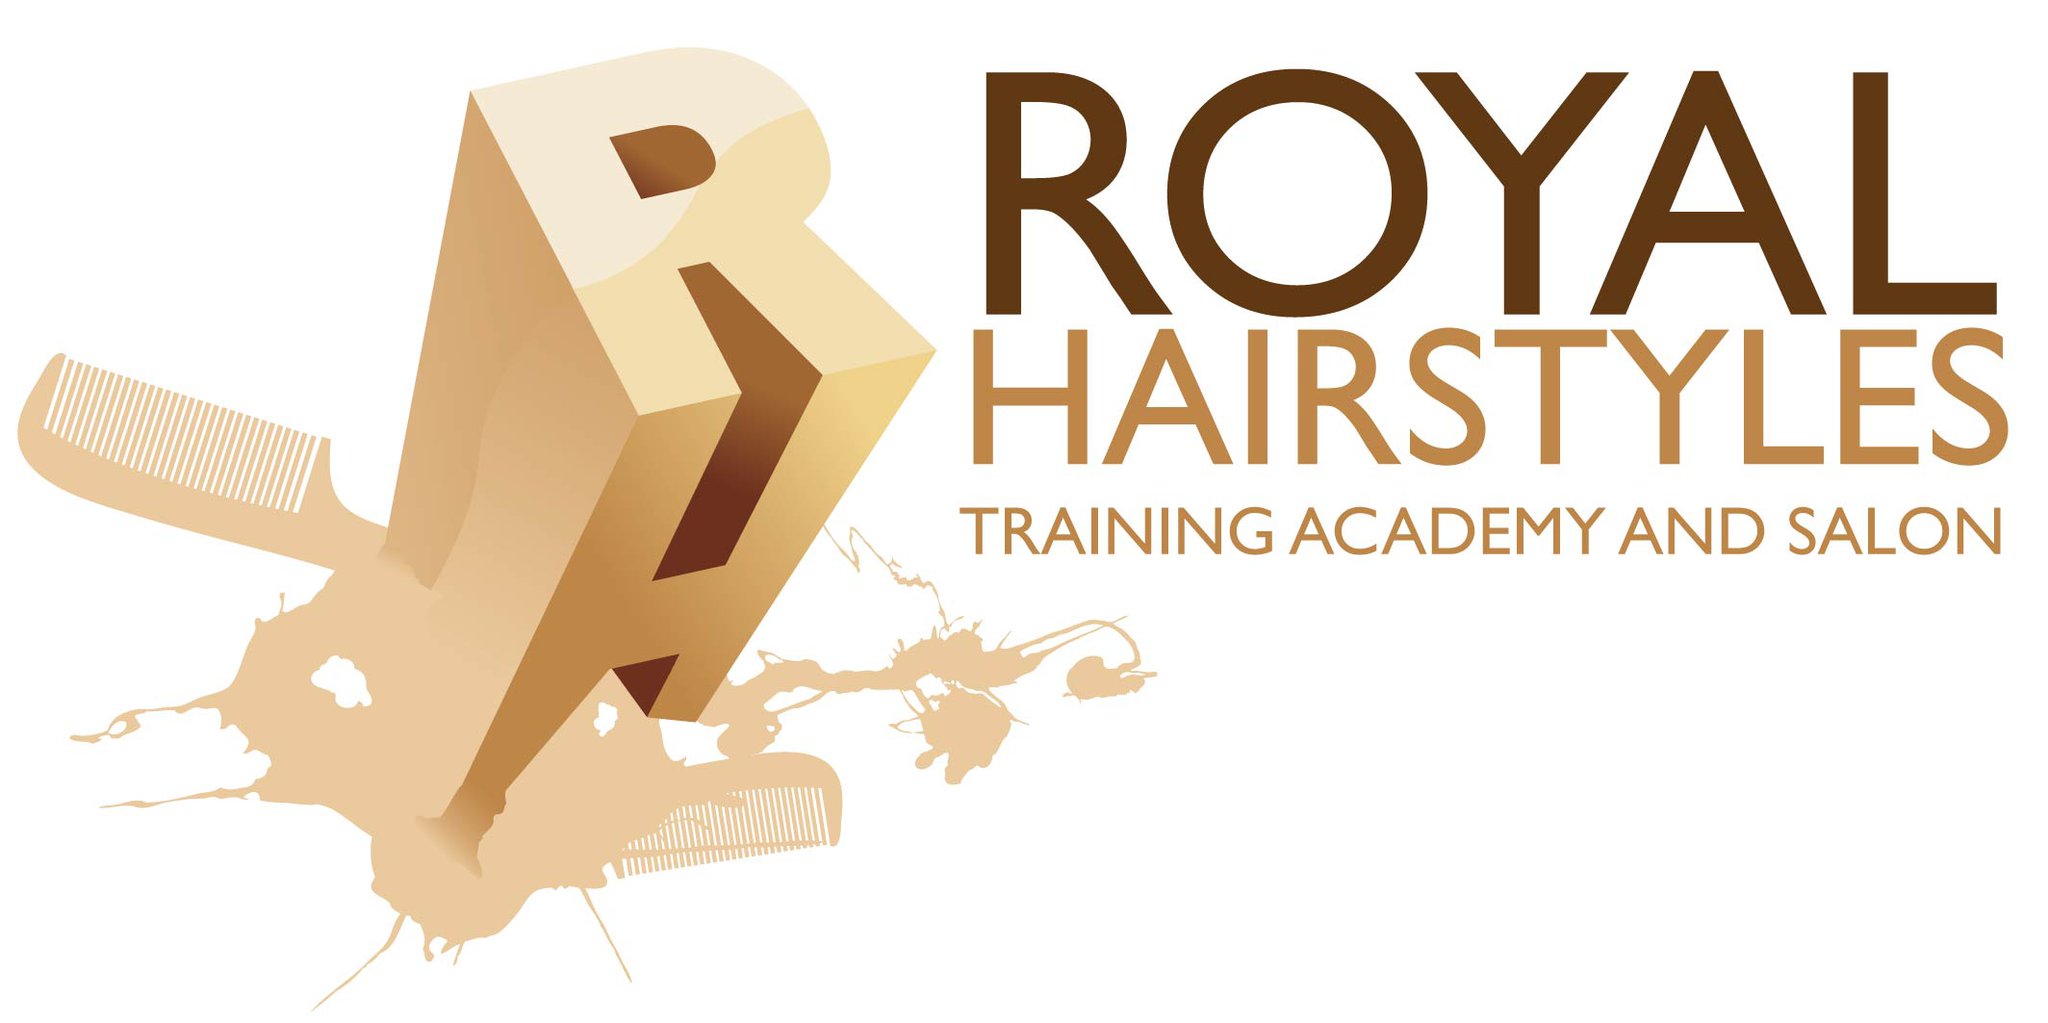 Royal Hairstyles Training Academy and Salon Logo